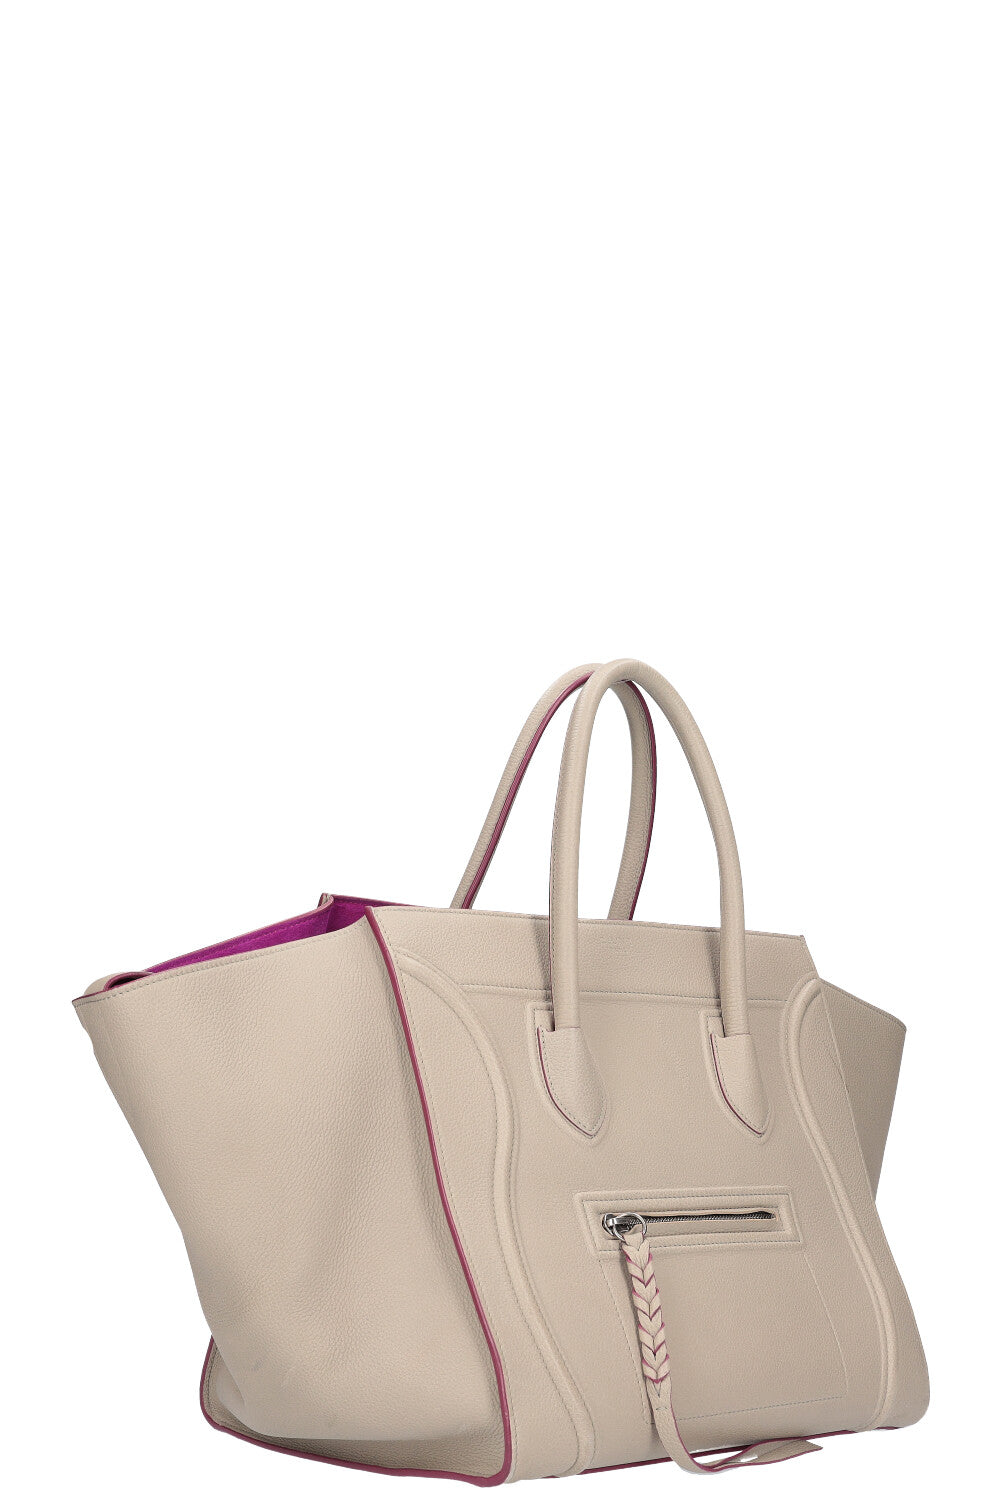 CÉLINE Phantom Bags & Handbags for Women for sale | eBay